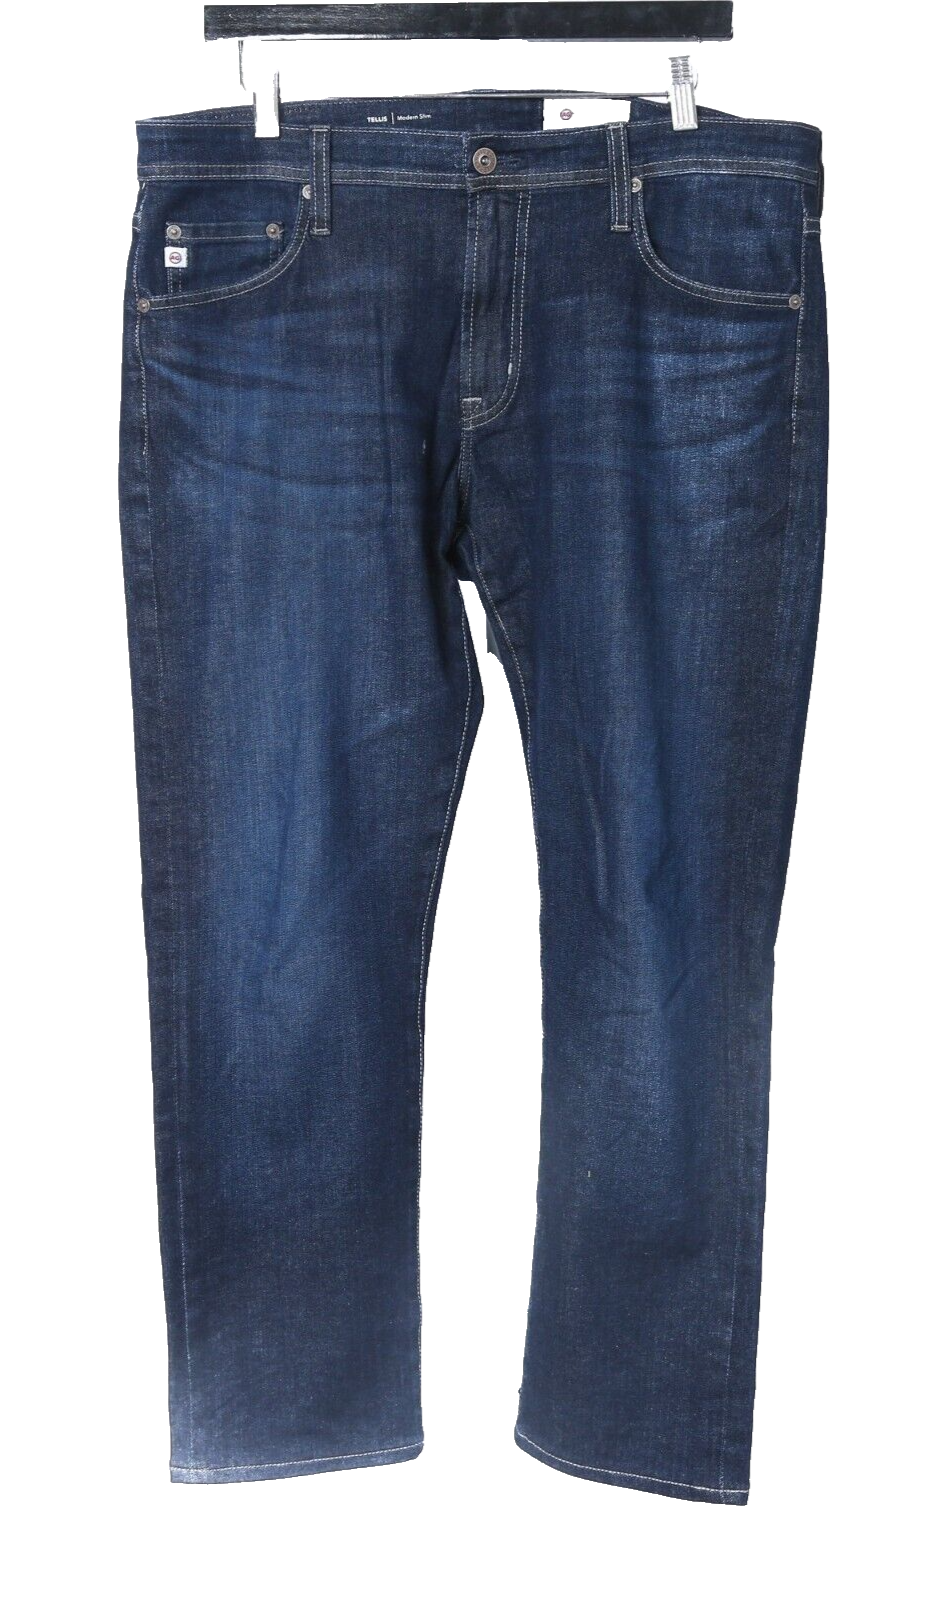 Primary image for AG Adriano Goldschmied Denim 360 Jeans Mens 33x34 Tellis Modern Slim